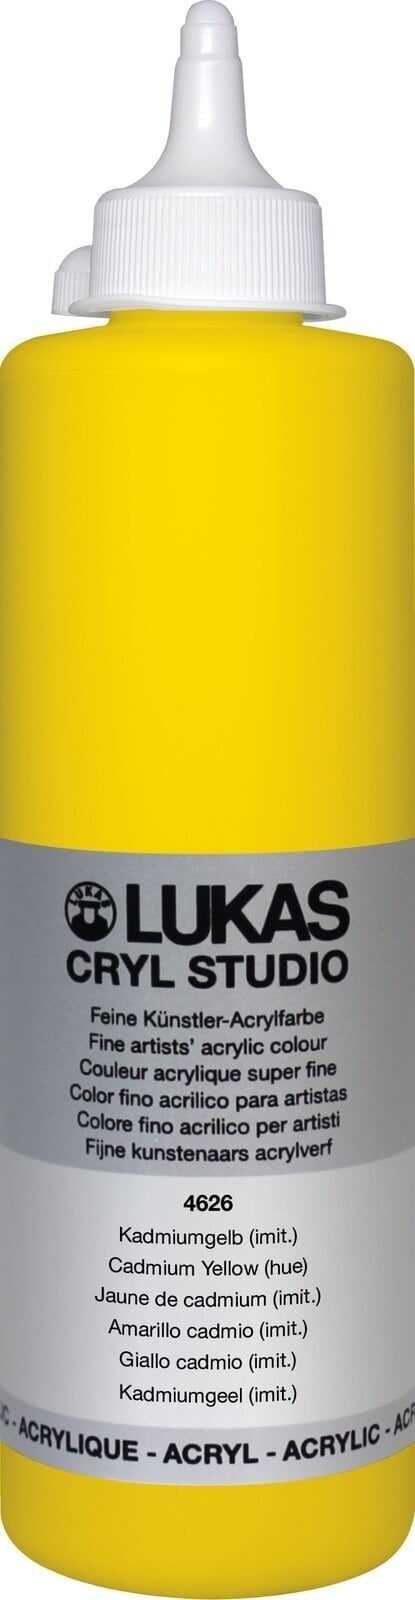 Tinta acrílica Lukas Cryl Studio Tinta acrílica 500 ml Cadmium Yellow Hue